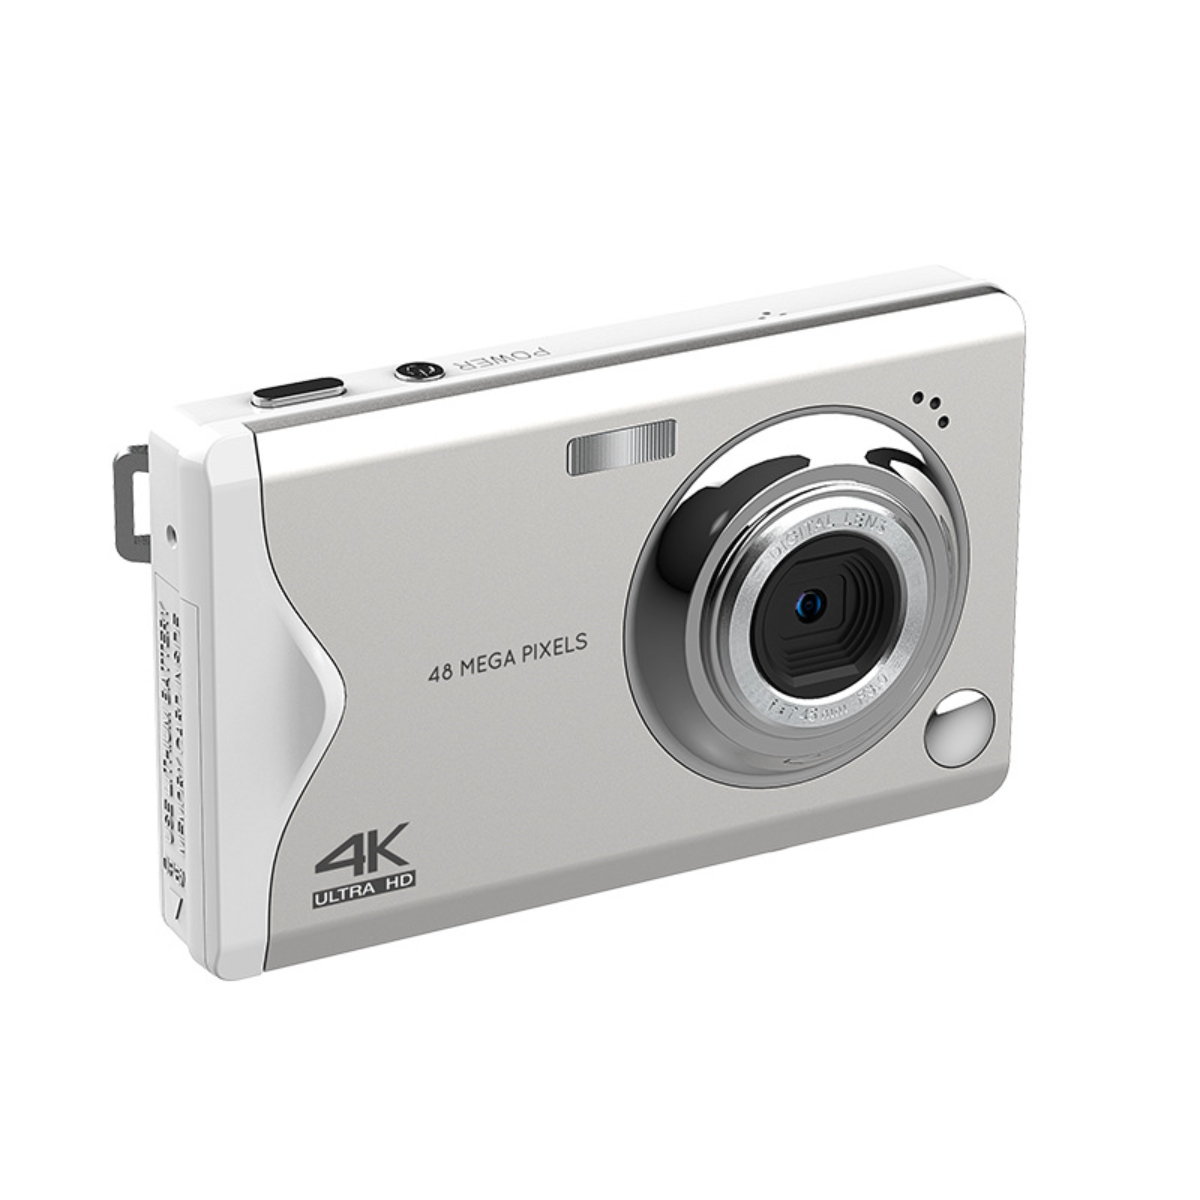 SYNTEK Digitalkamera 4K HD in Leichte Silber 3-Zoll-Großbildschirm Autofokus HD-Kamera Digitalkamera weiß, Flüssigkristallbildschirm